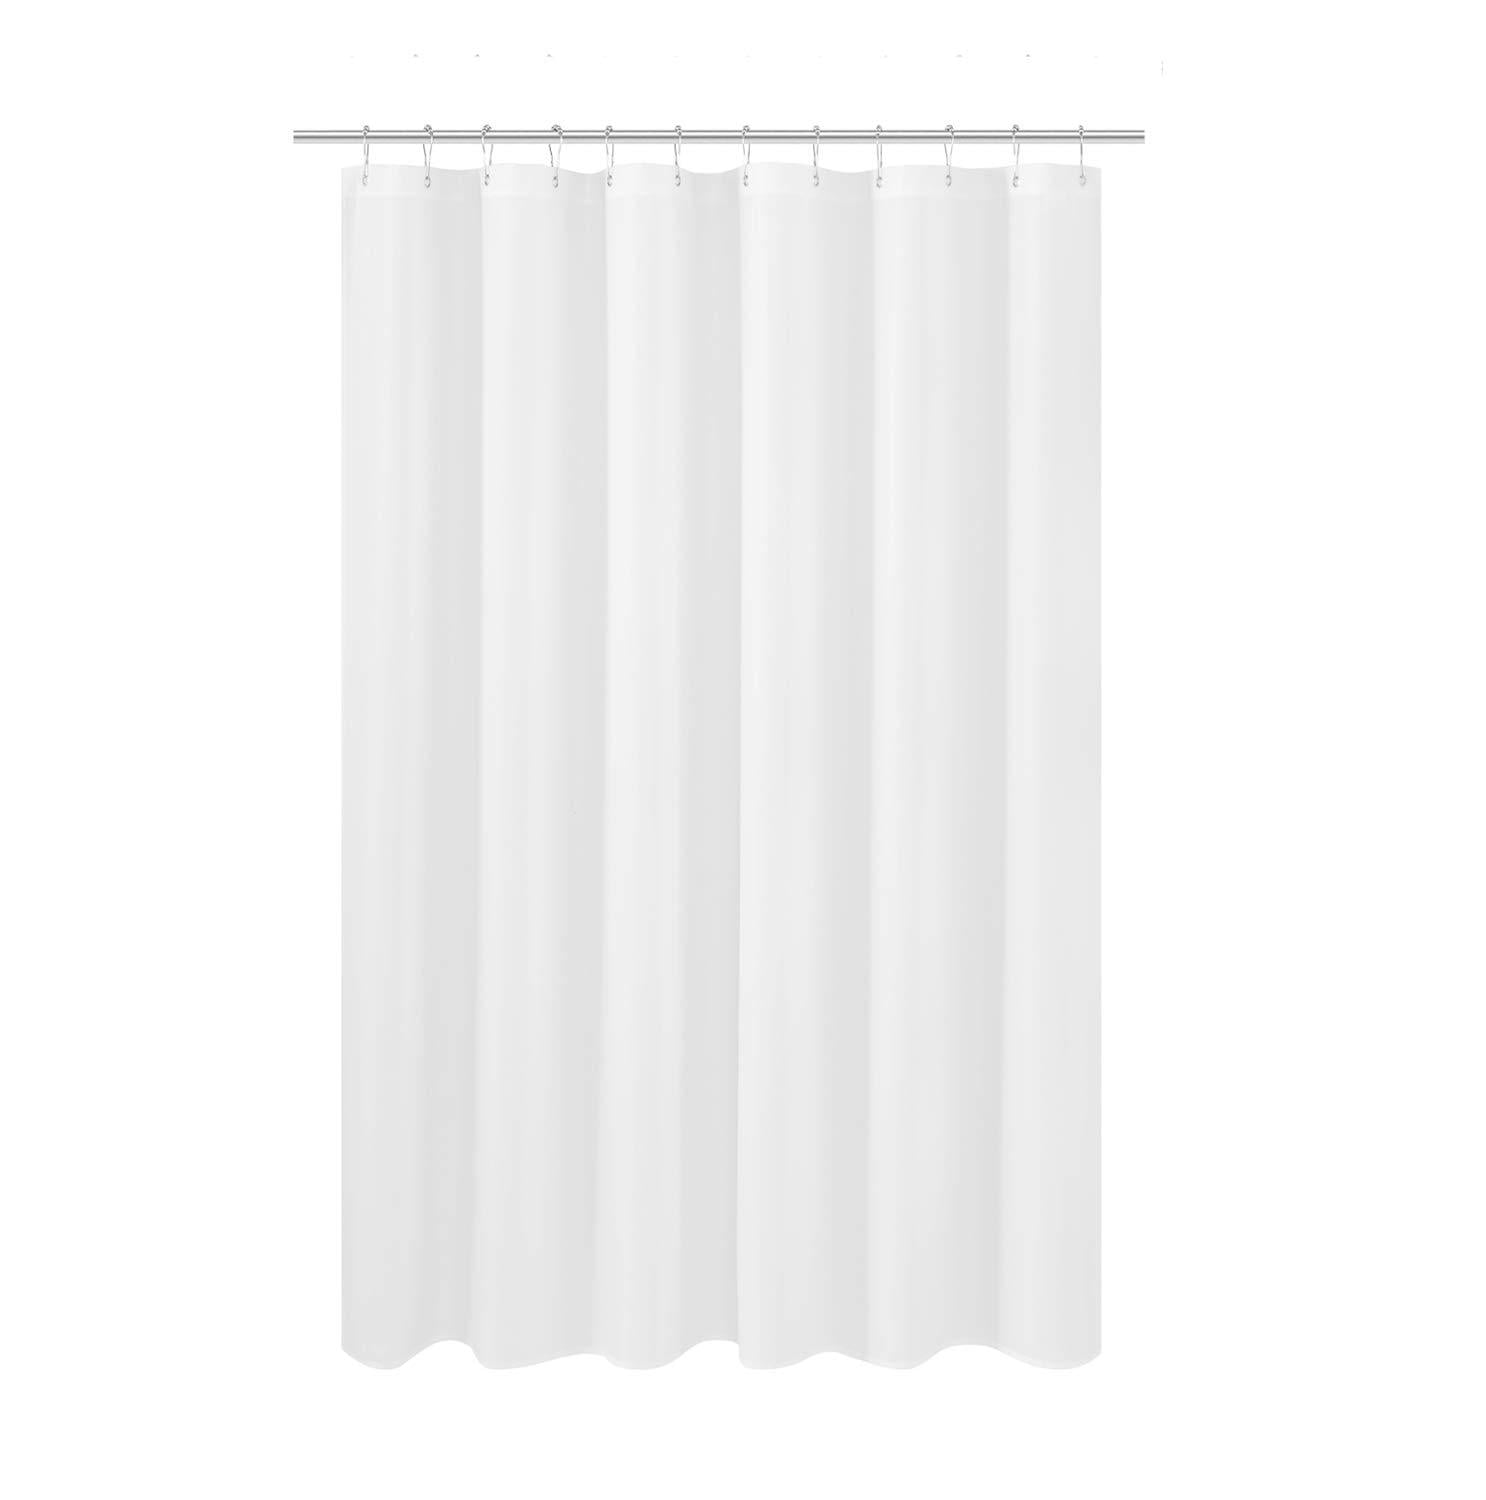 Super Mario Waterproof Fabric Shower Curtain Cartoon Bathroom Curtain 70x70 Inch 